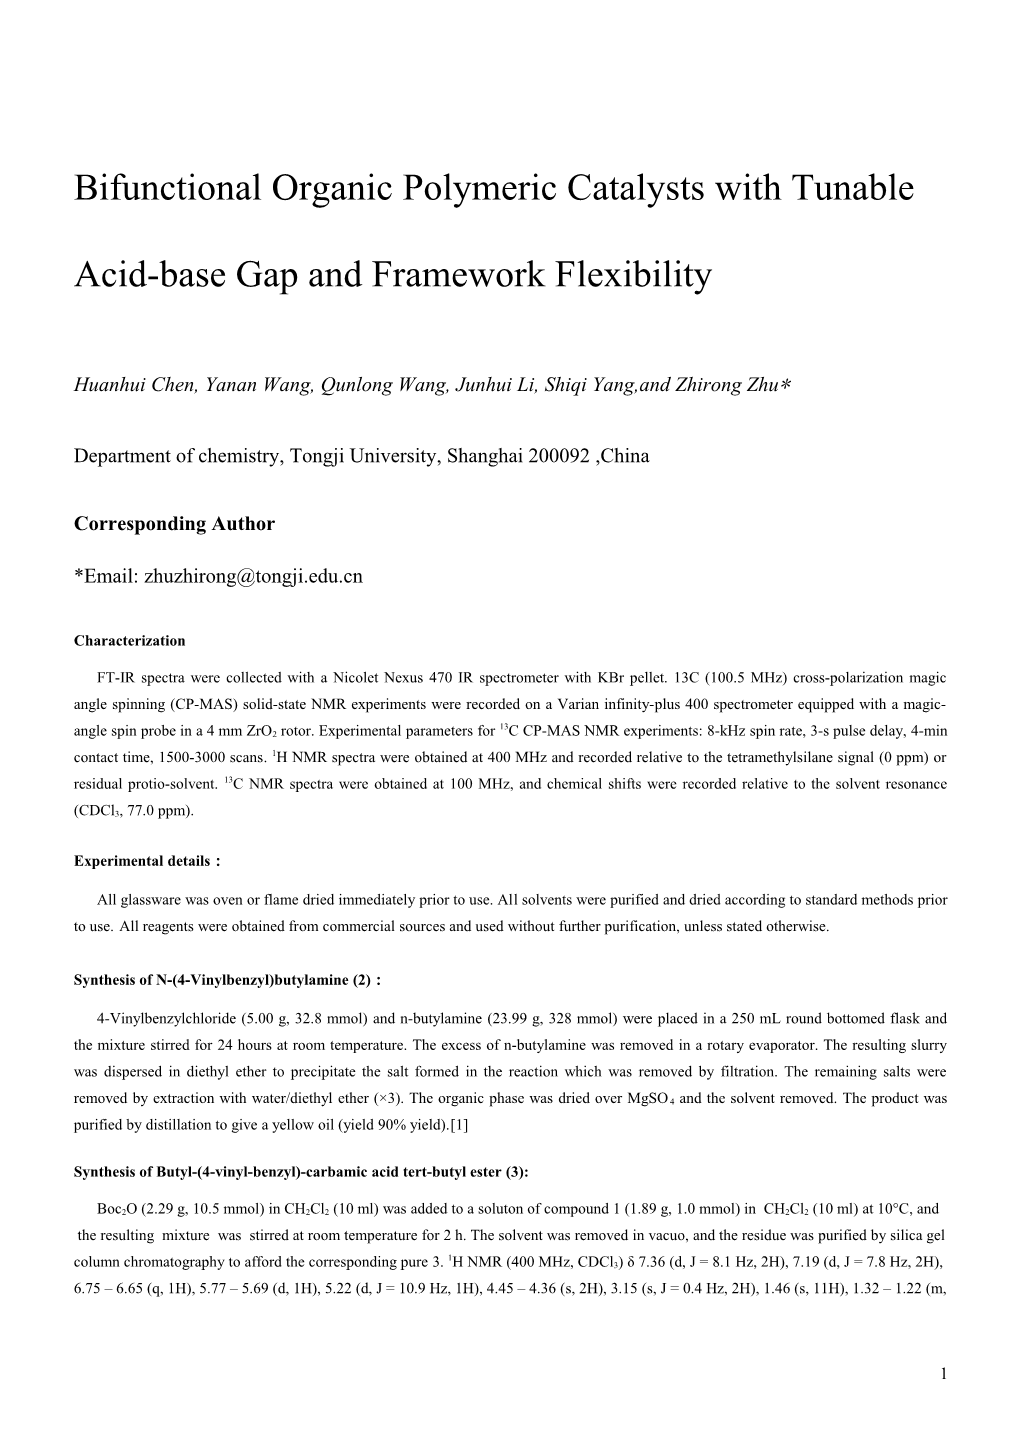 Bifunctional Organic Polymeric Catalysts with Tunable Acid-Base Gap and Framework Flexibility